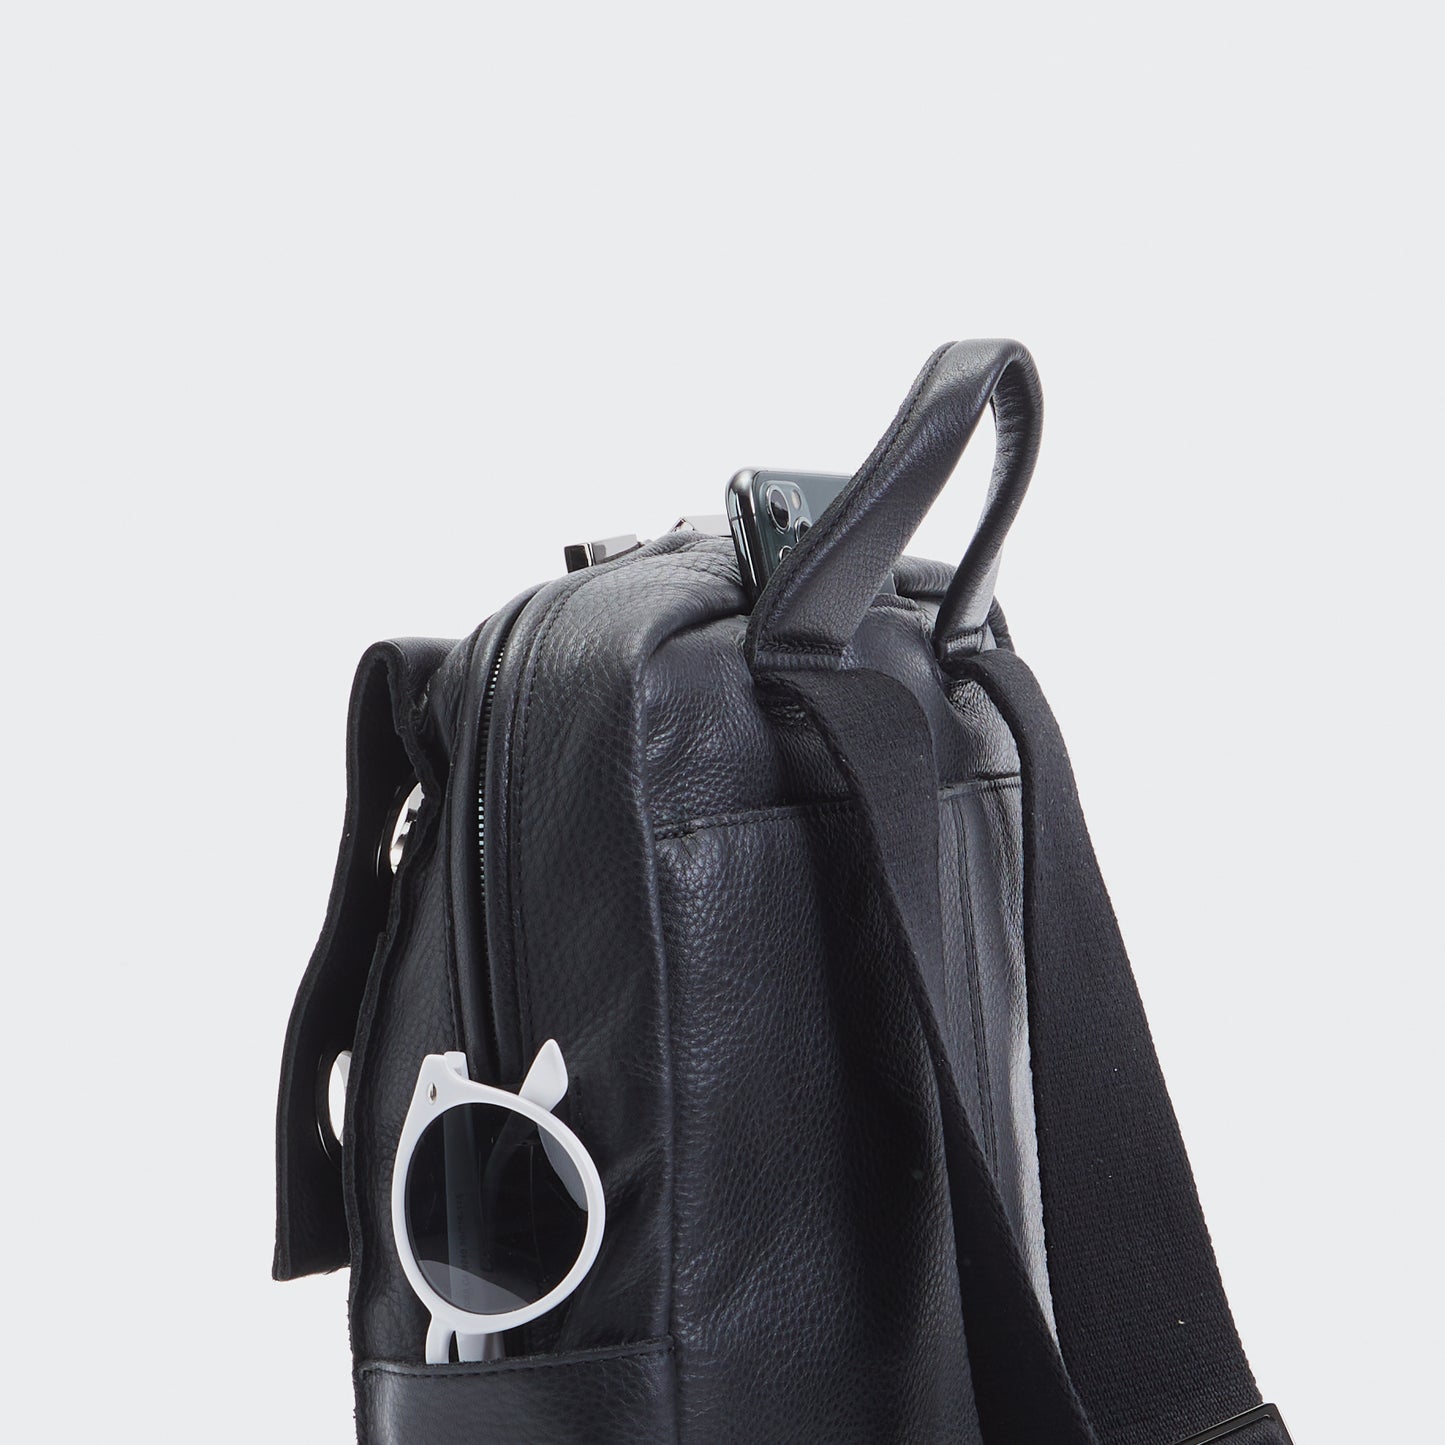 Hammitt Montana Large Backpack Black Pebbled Leather